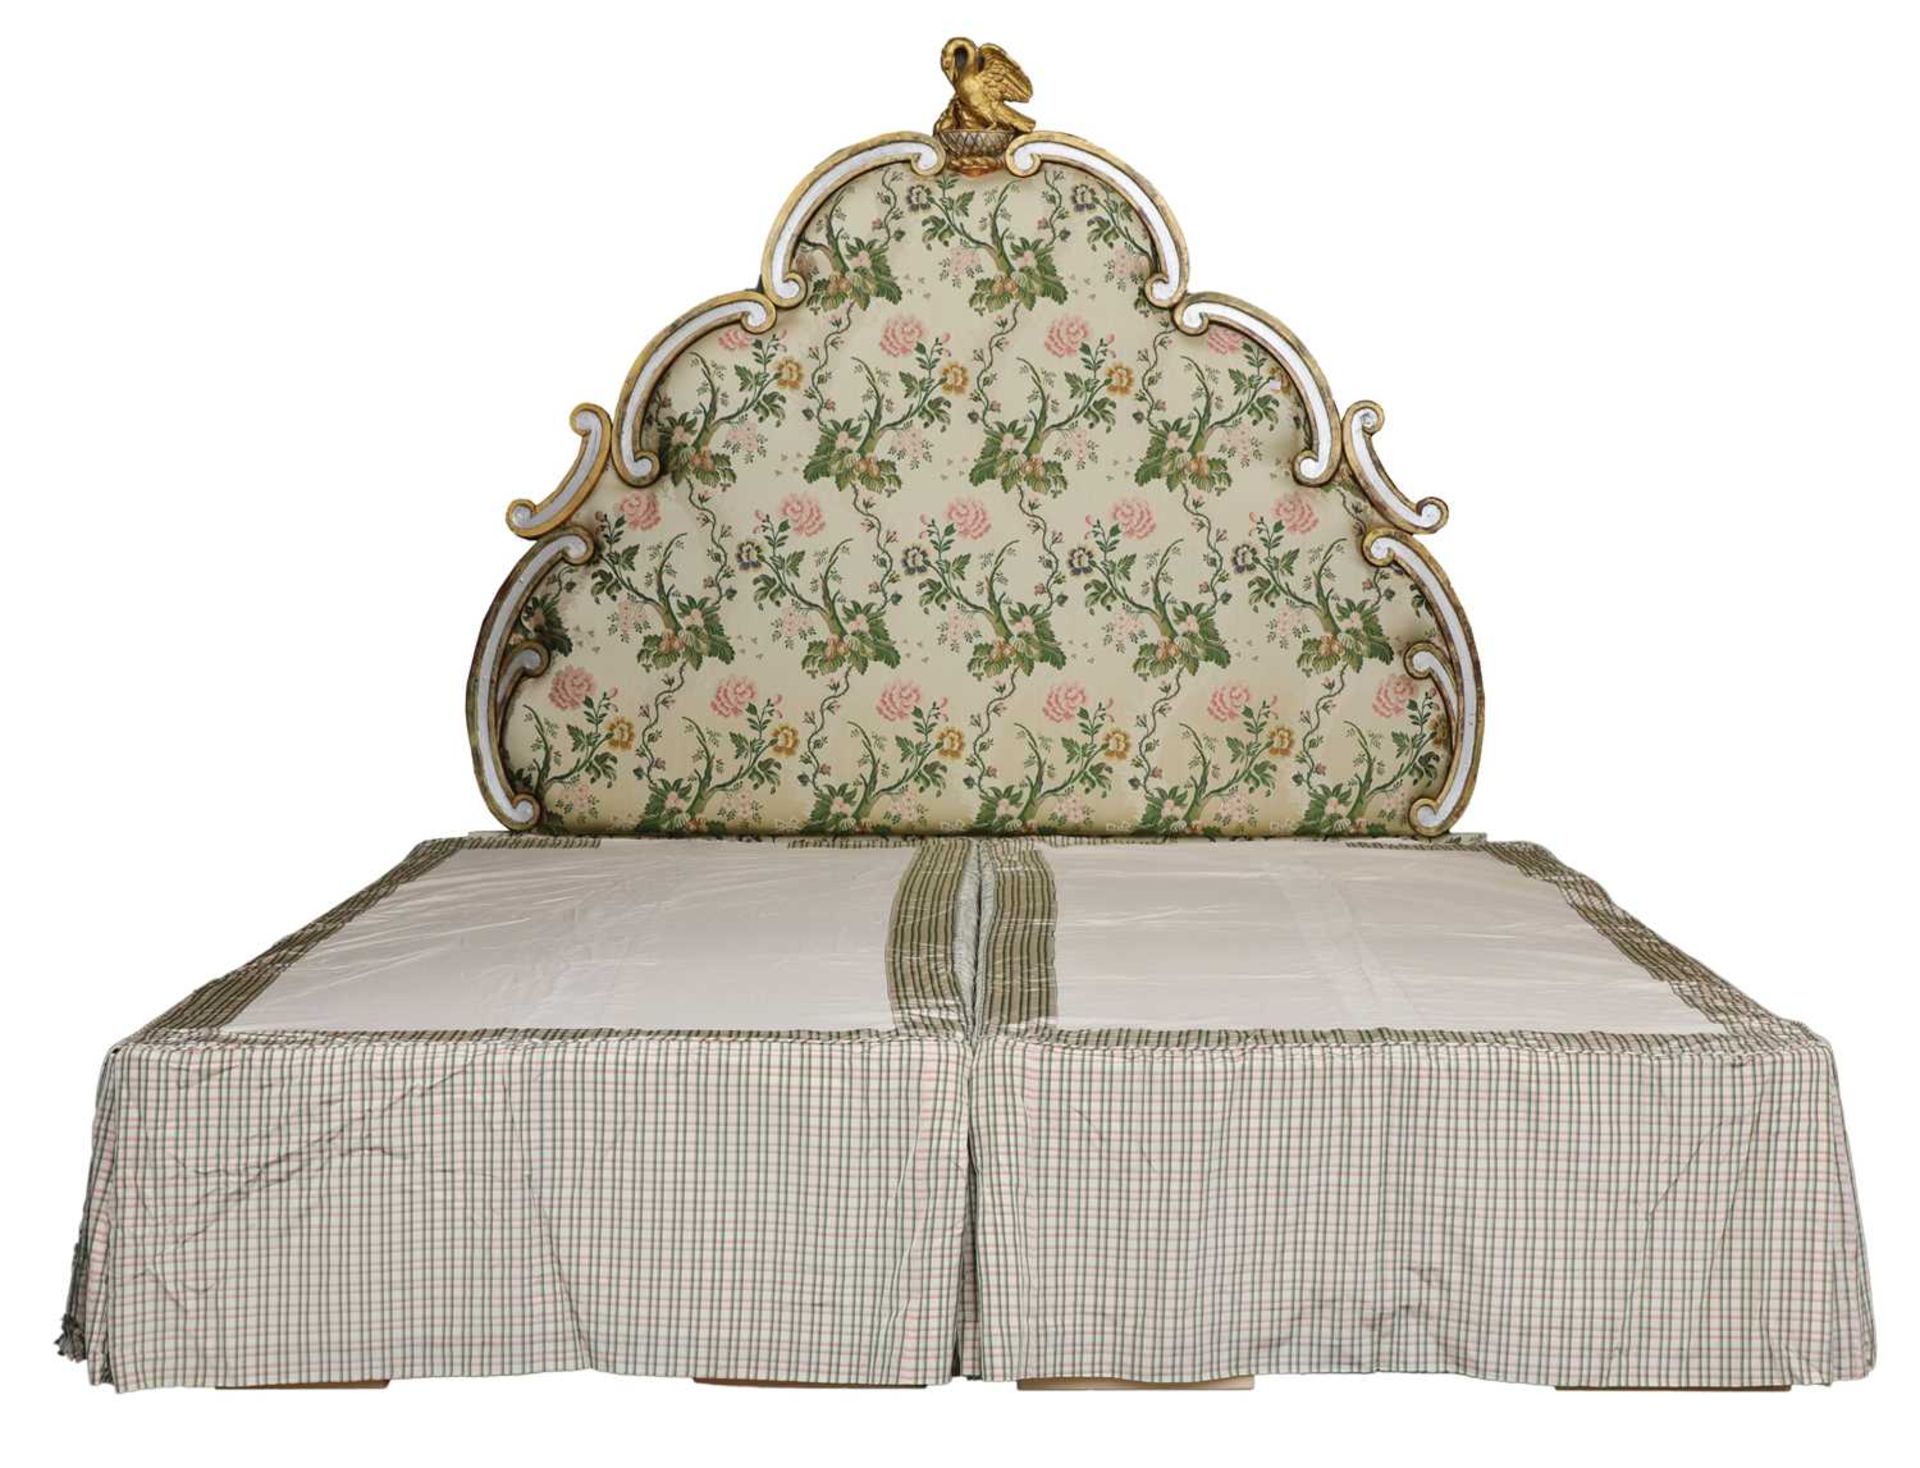 An Emperor bed,